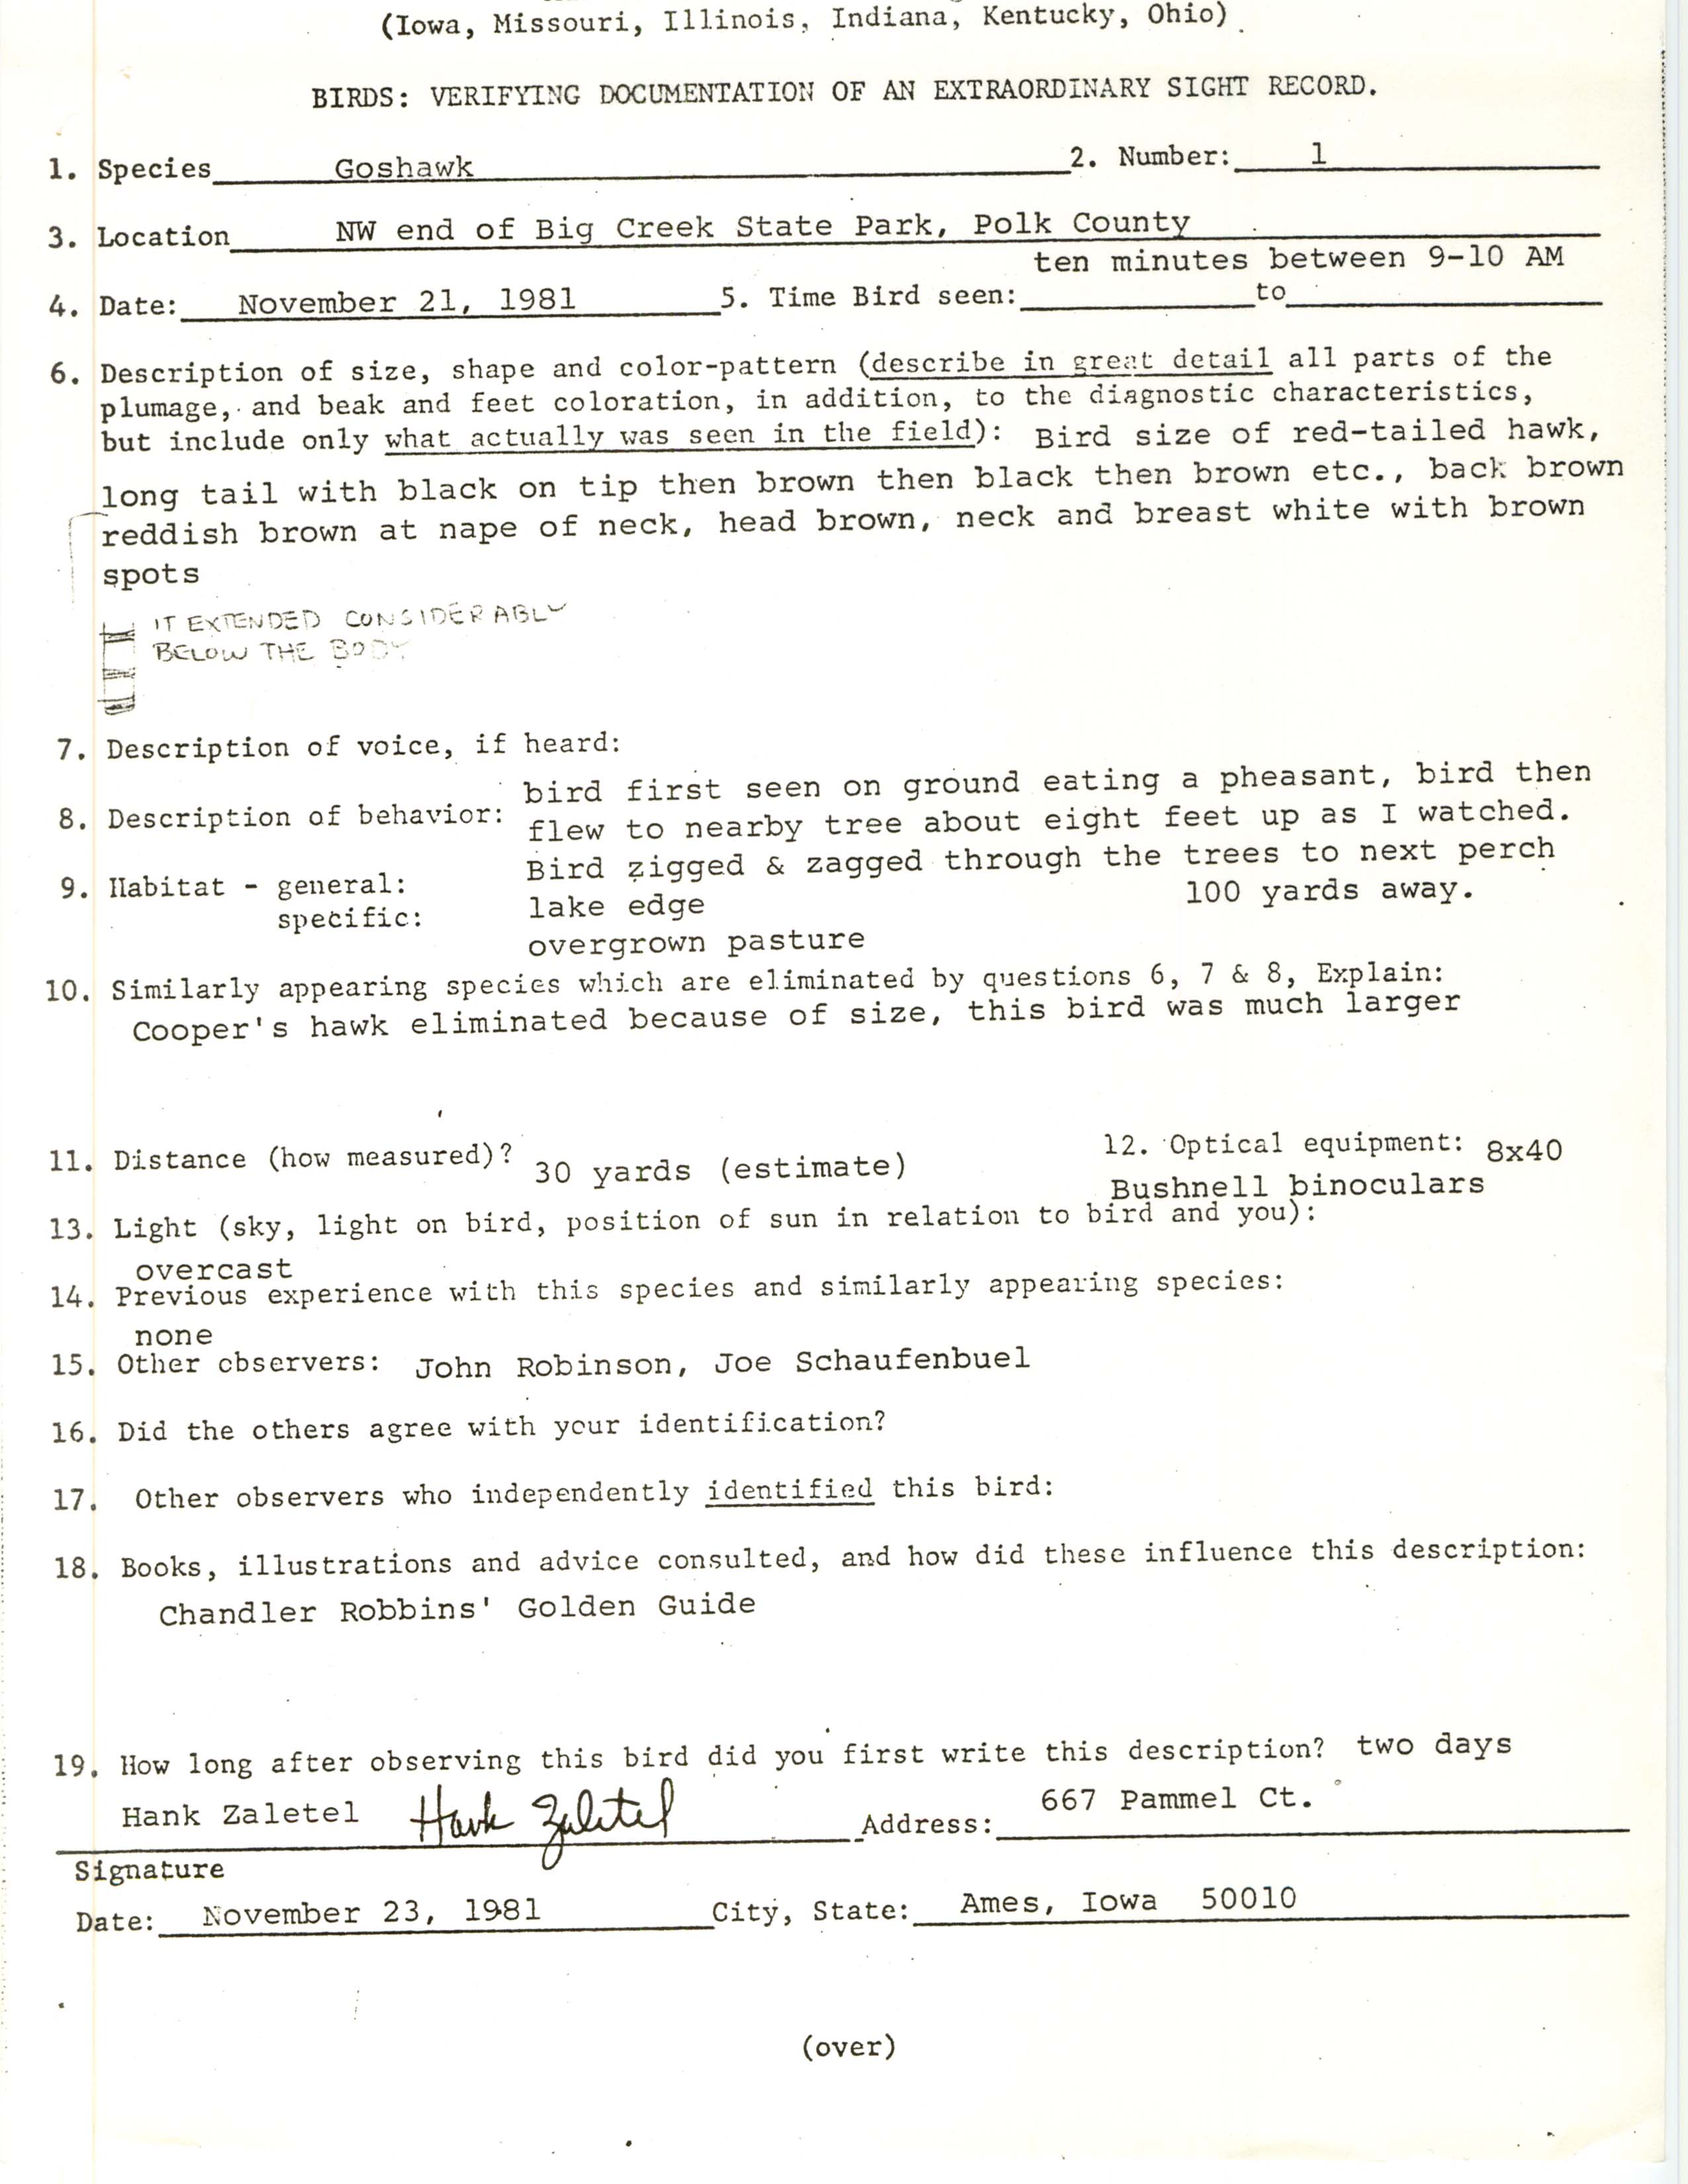 Rare bird documentation form for Northern Goshawk at Big Creek State Park, 1981